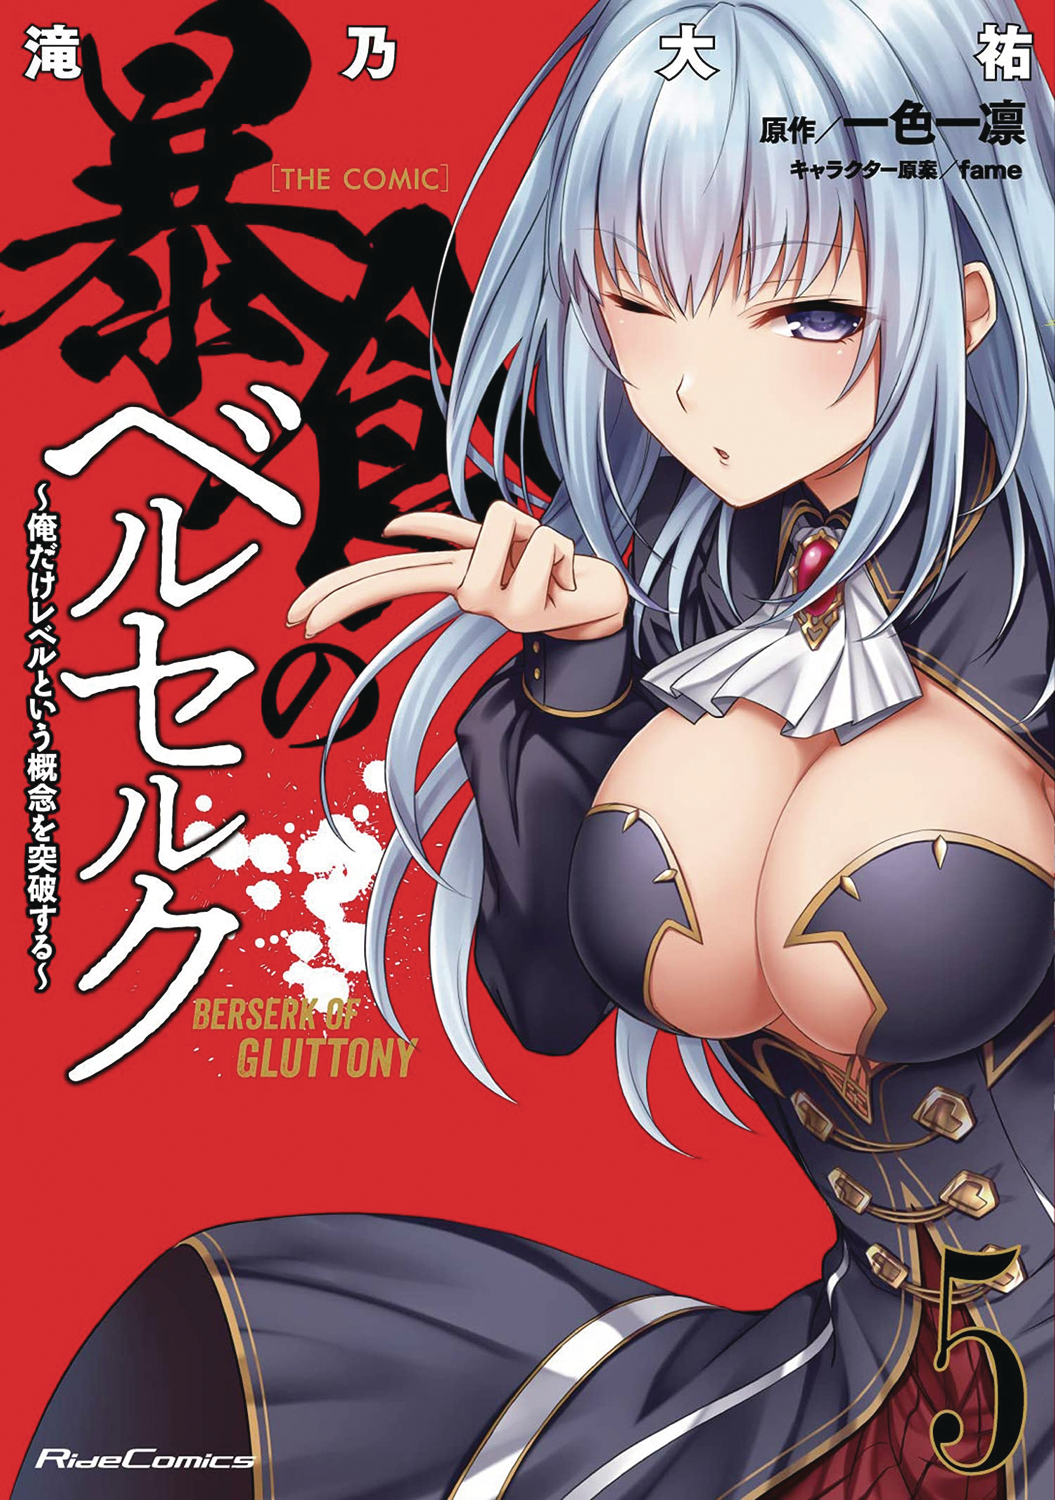 Berserk of Gluttony Manga Volume 5